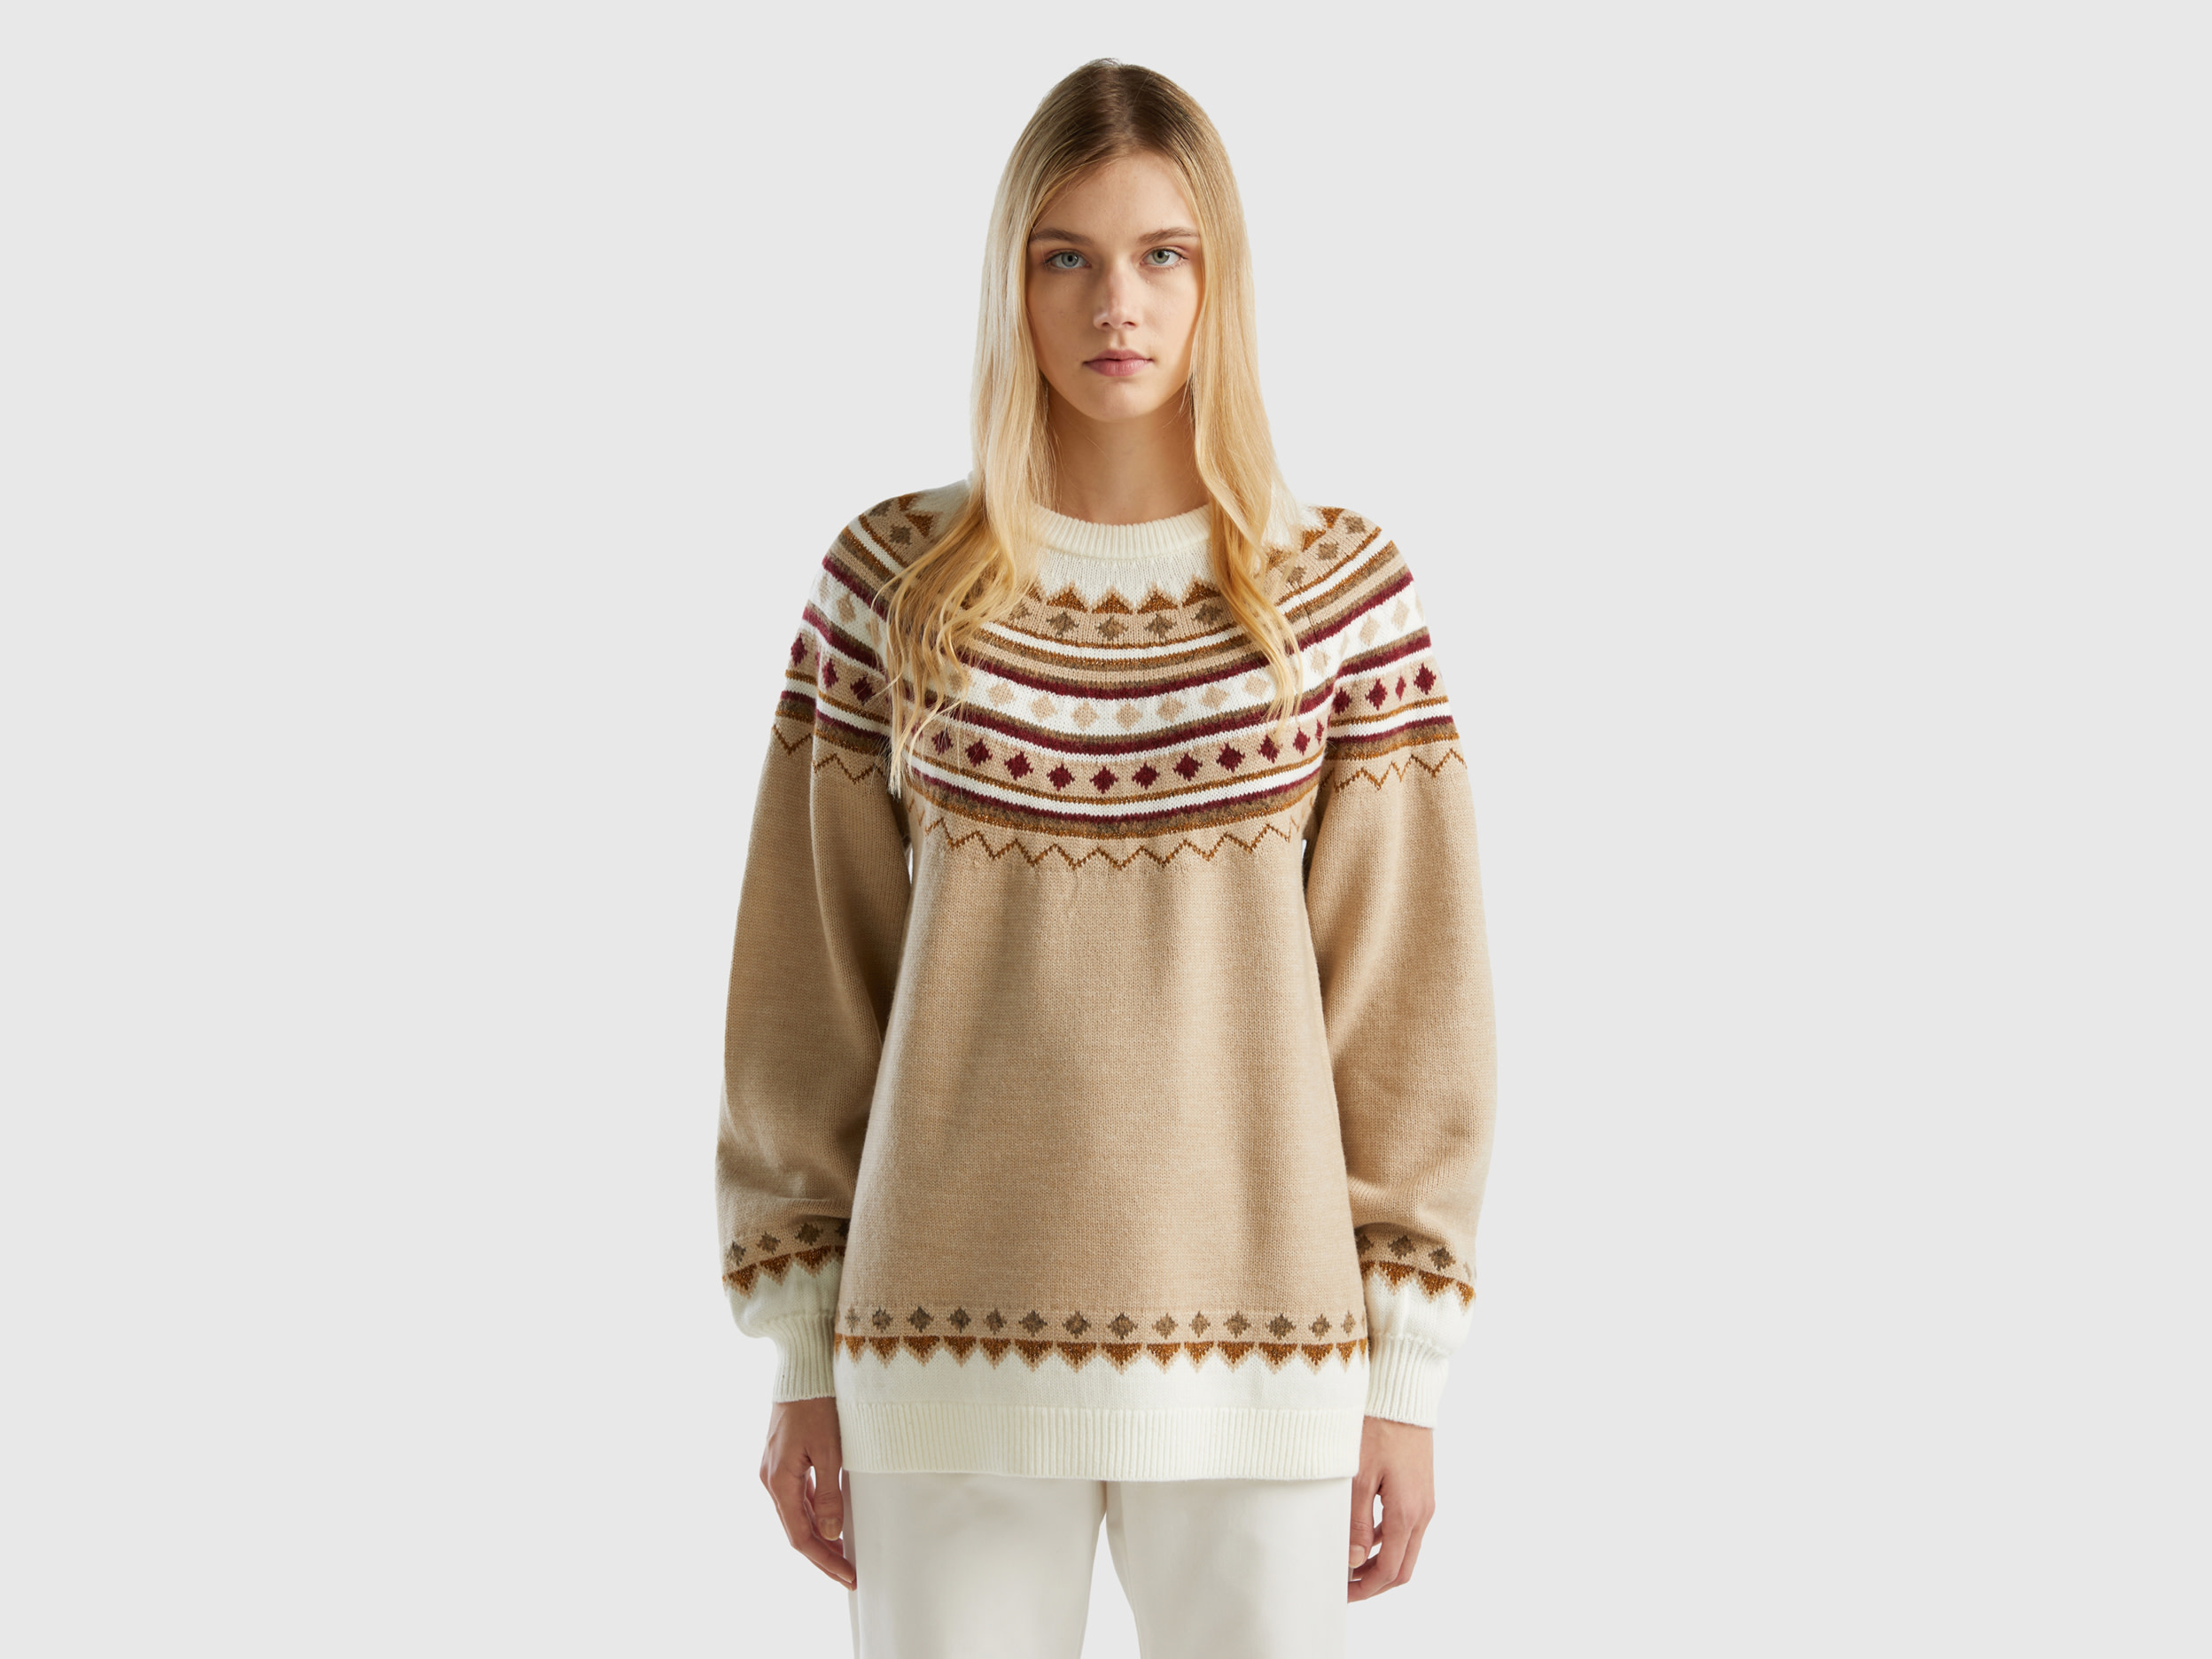 Benetton, Jacquard Sweater With Lurex, size XS-S, Creamy White, Women